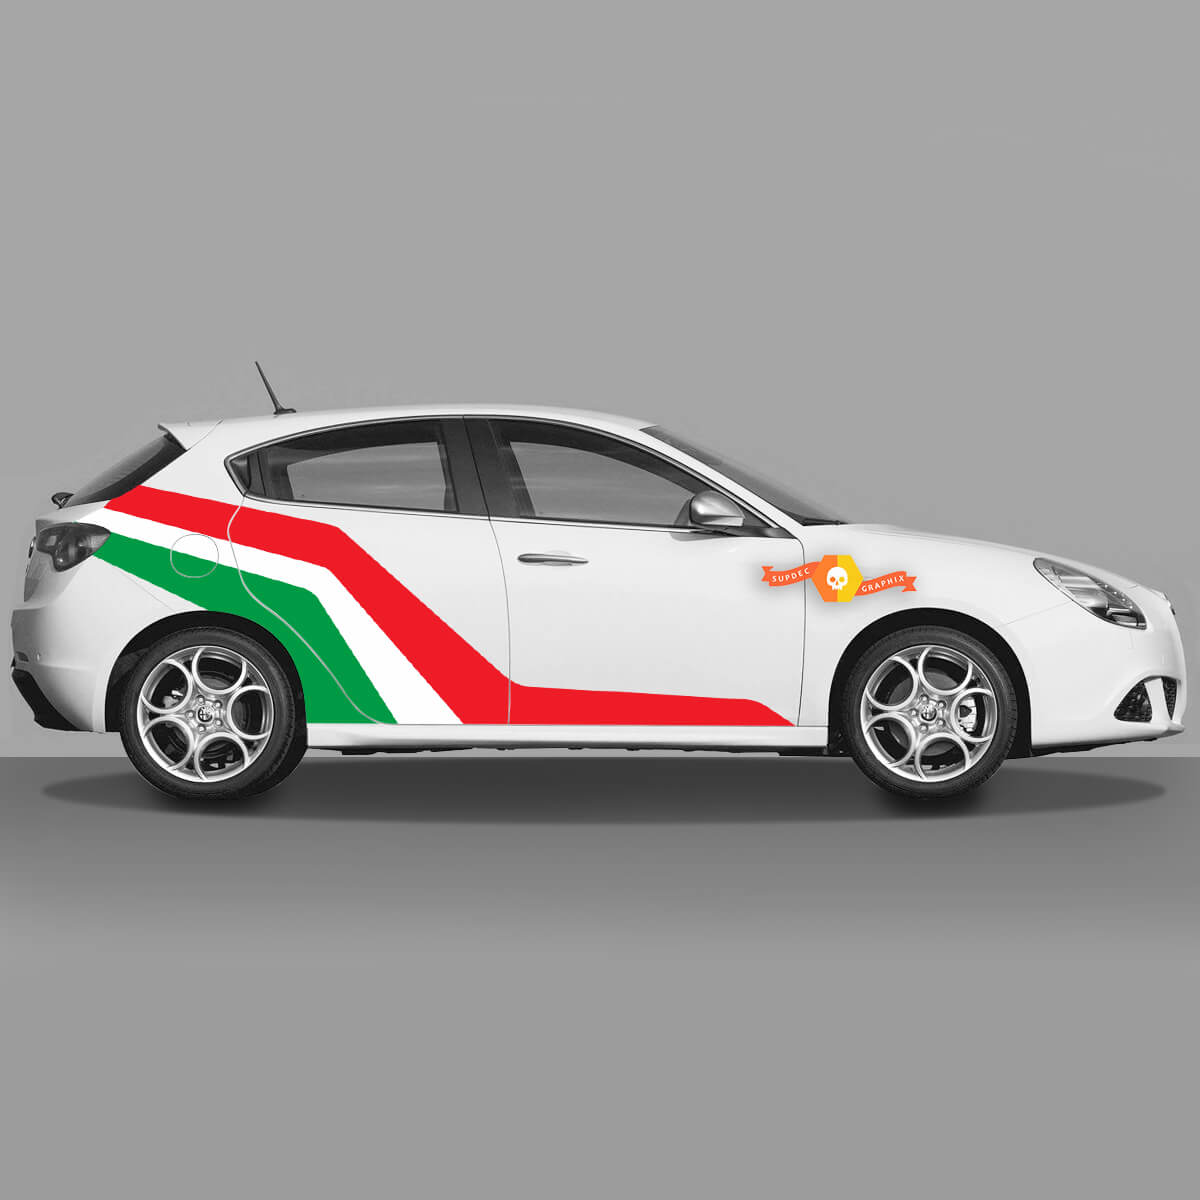 2x Default Italian Flag Colors Doors Decal fits Alfa Romeo Giulietta decals Vinyl Graphics Extended Altered
